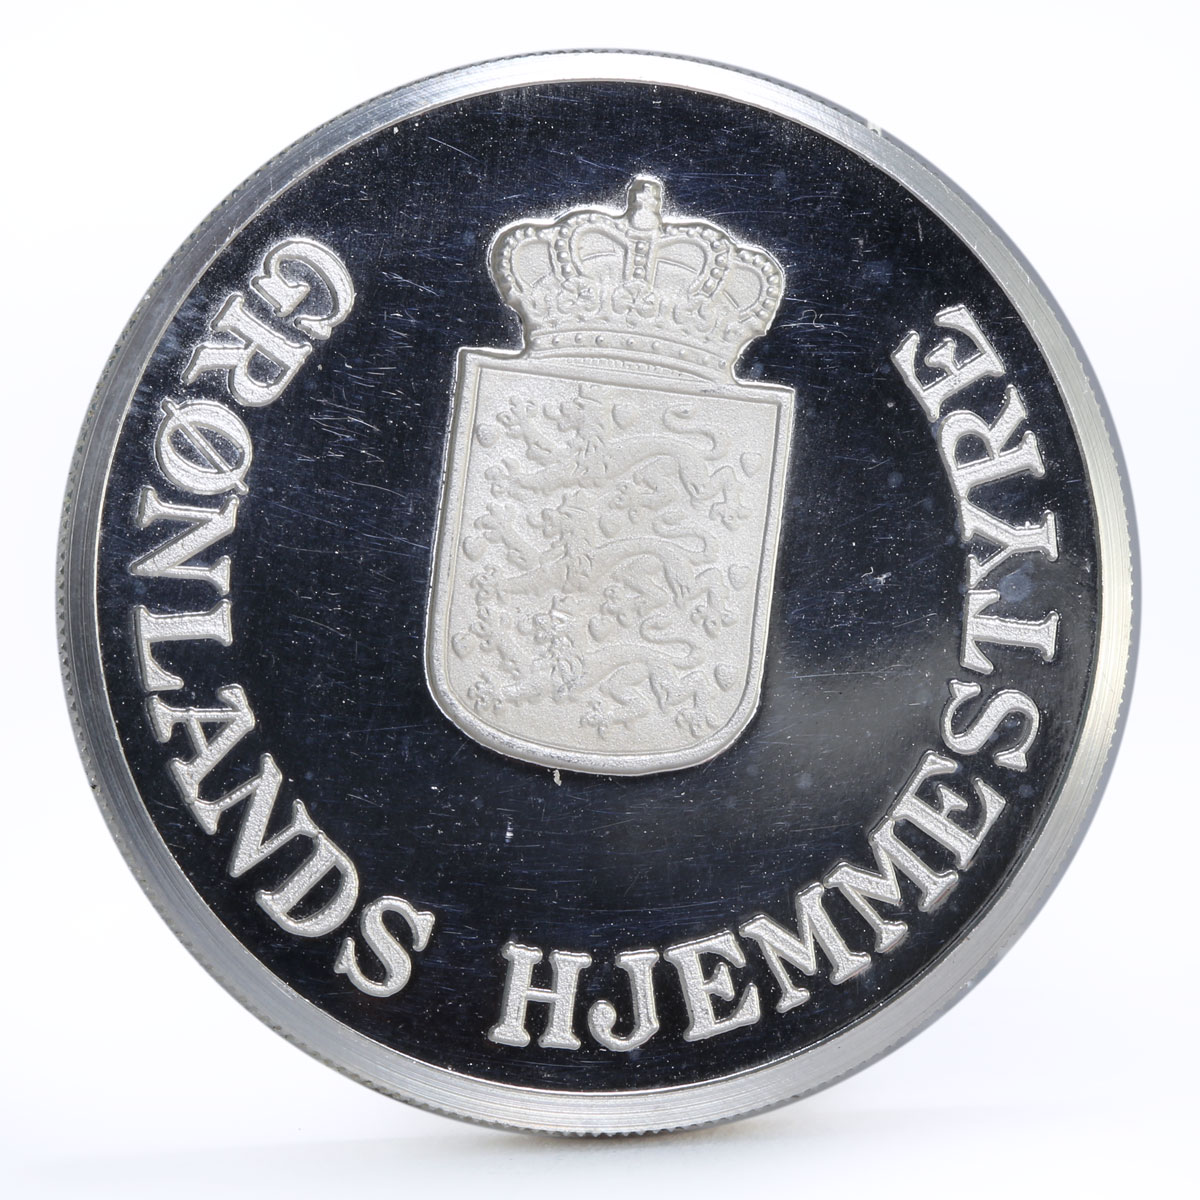 Denmark Greenland 25 ecu World Wildlife Fund series Polar Bear silver coin 1993